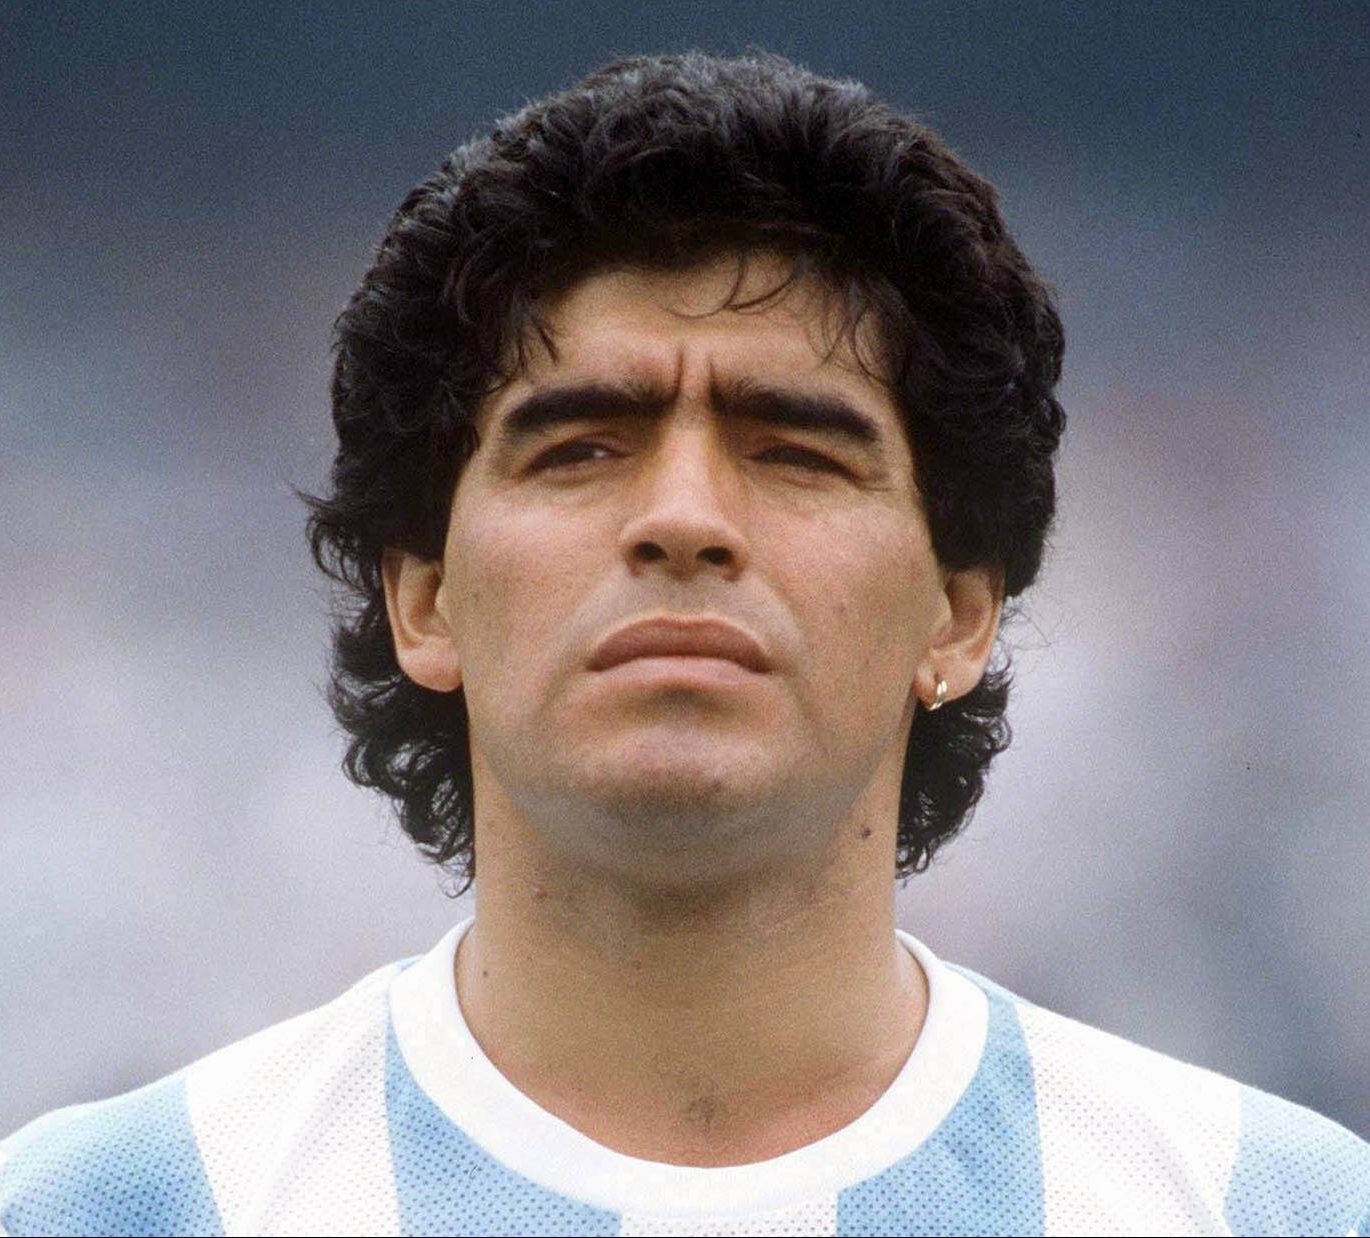 Diego Maradona Cause and Date